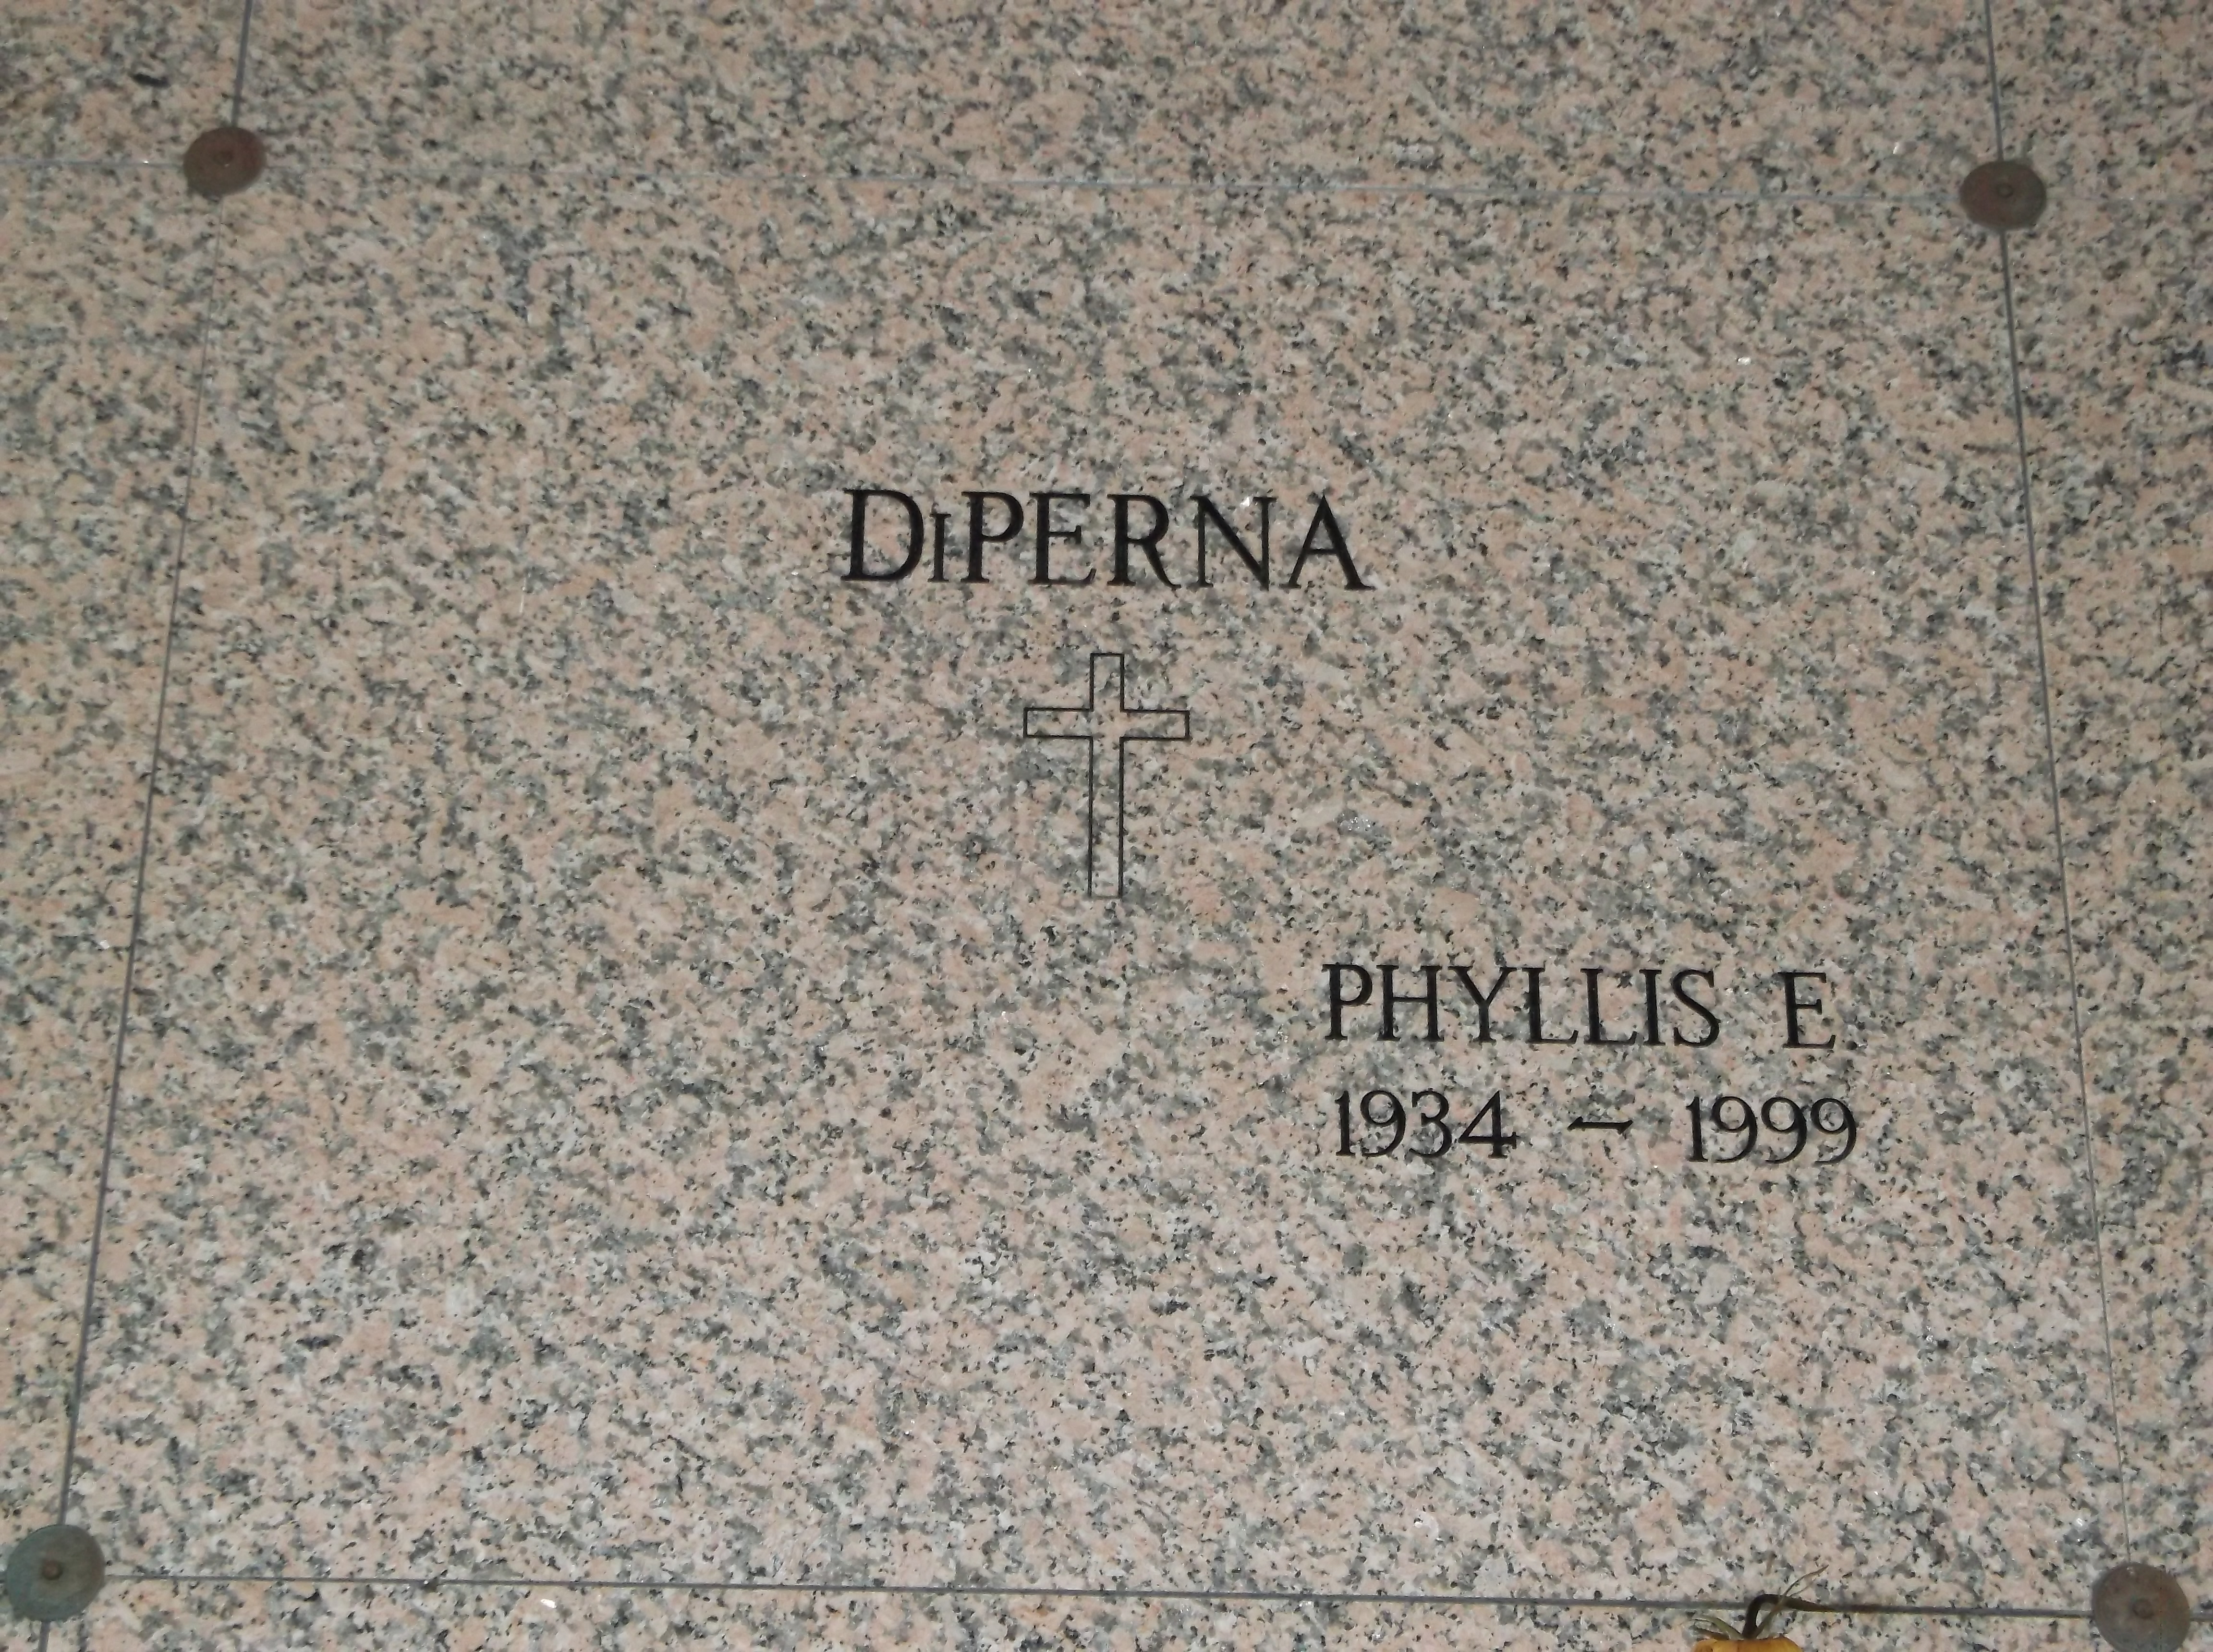 Phyllis E DiPerna